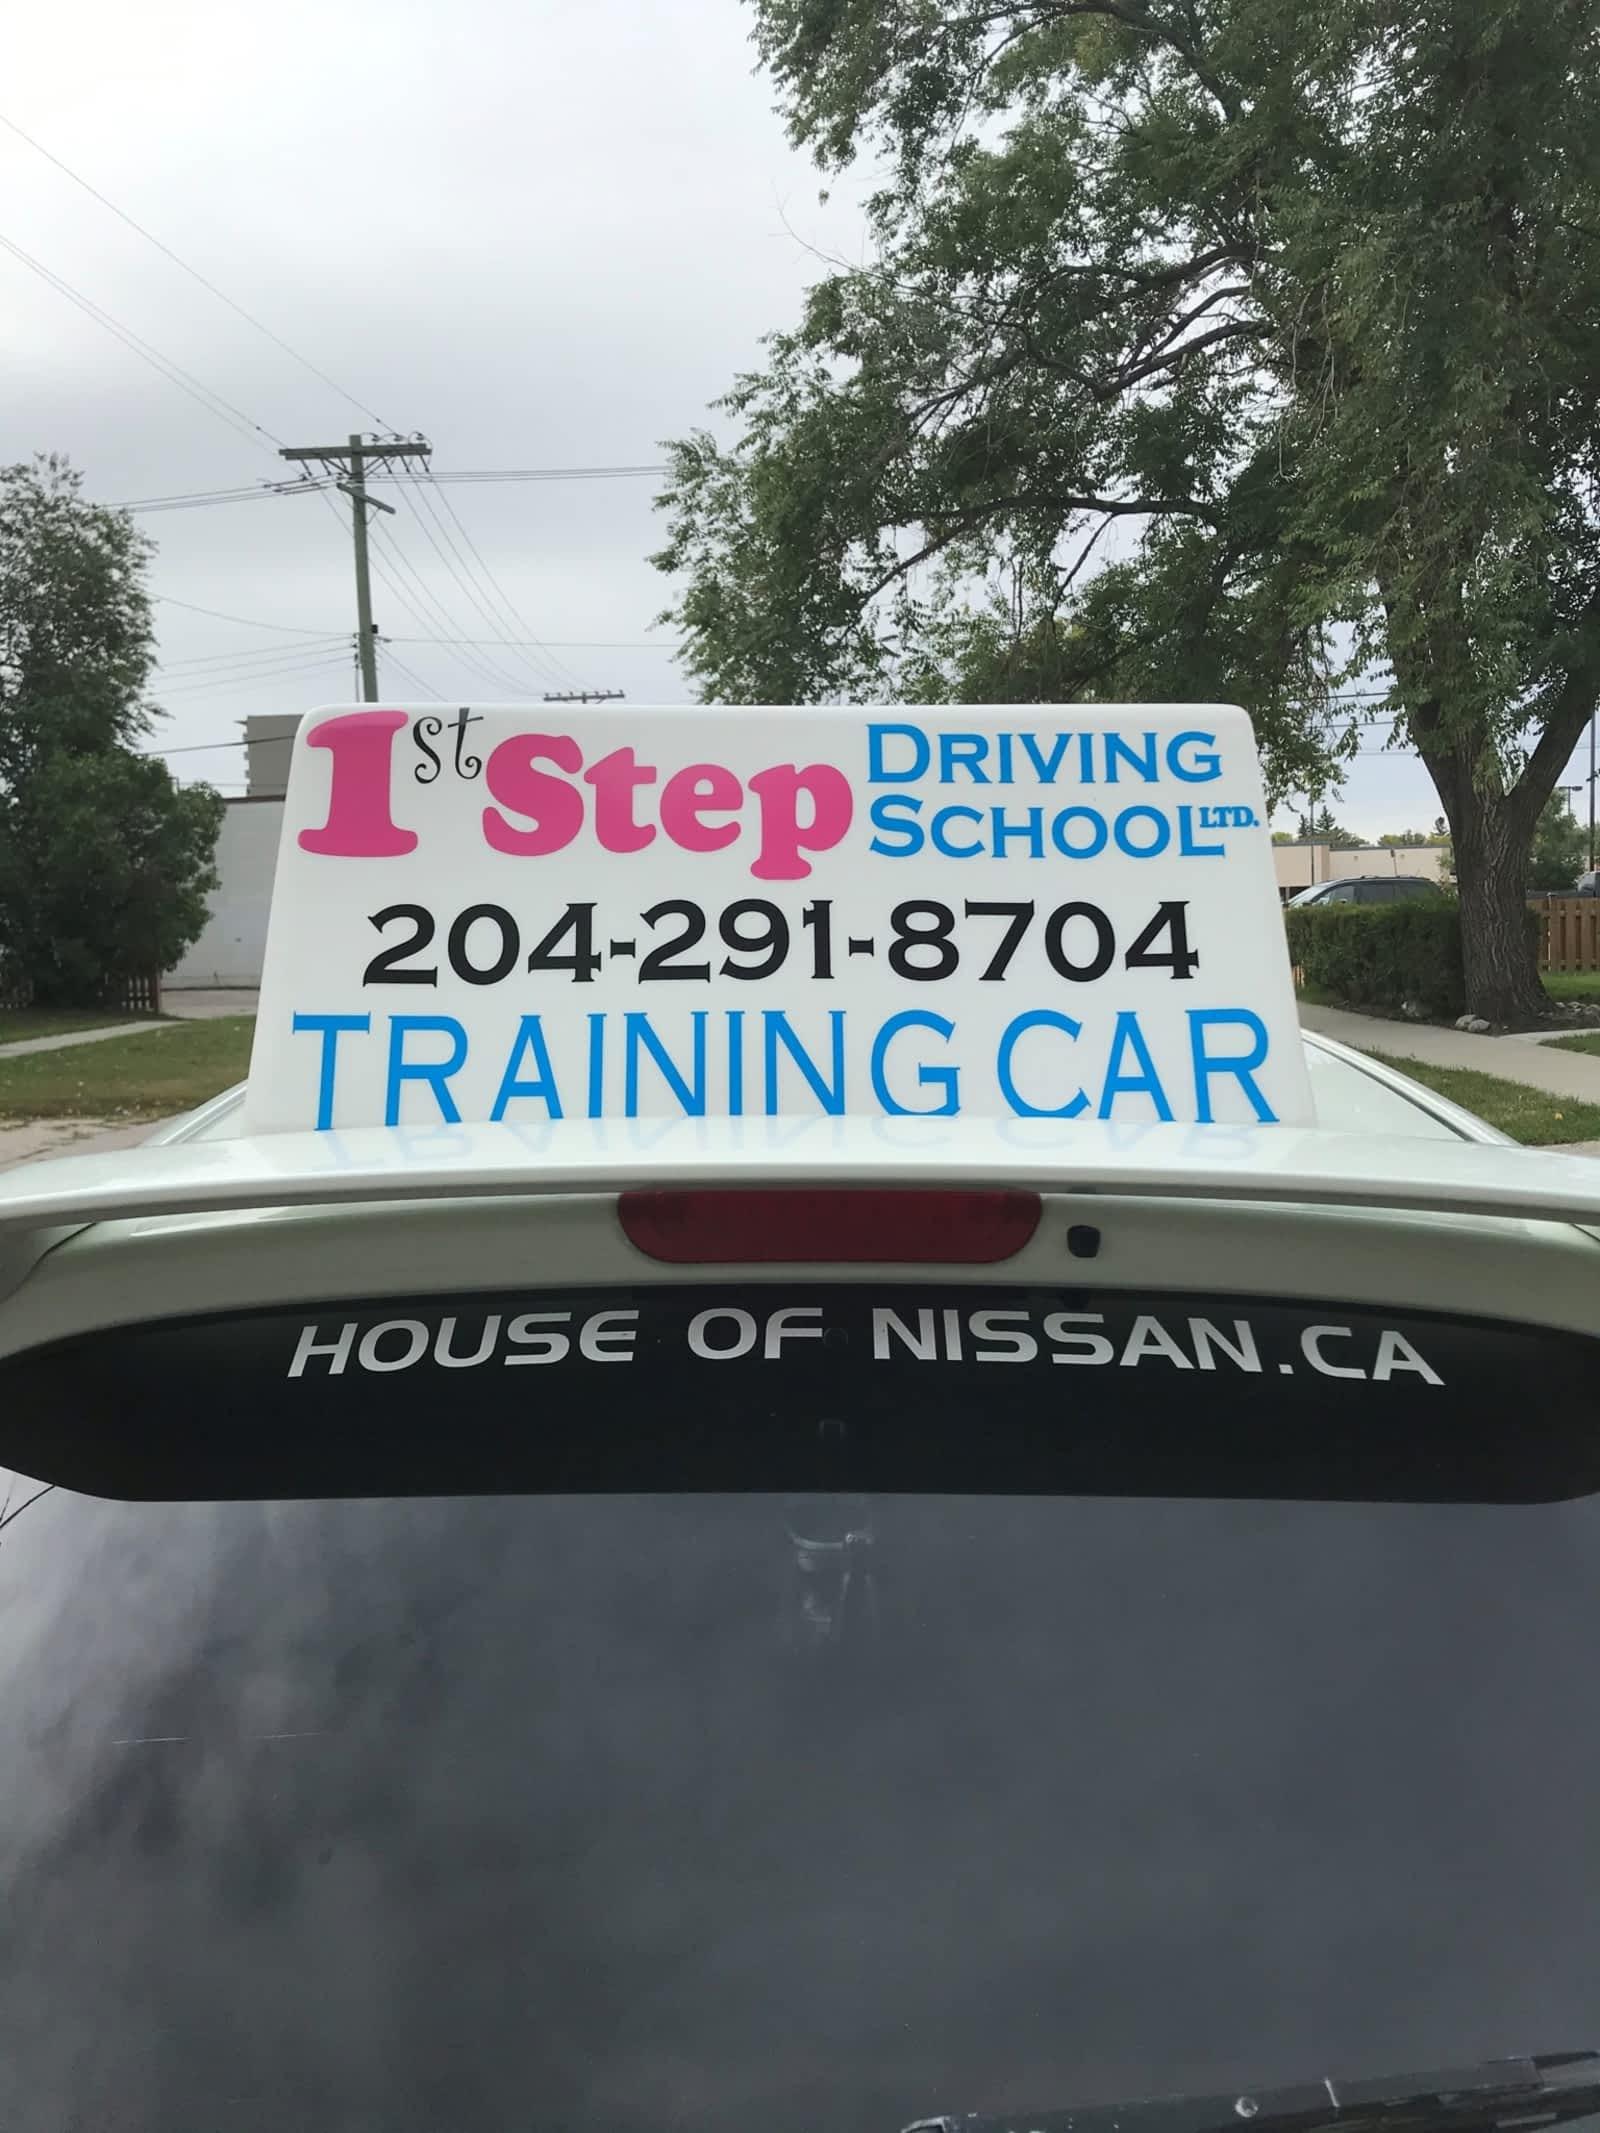 1st Step Driving School Vehicle